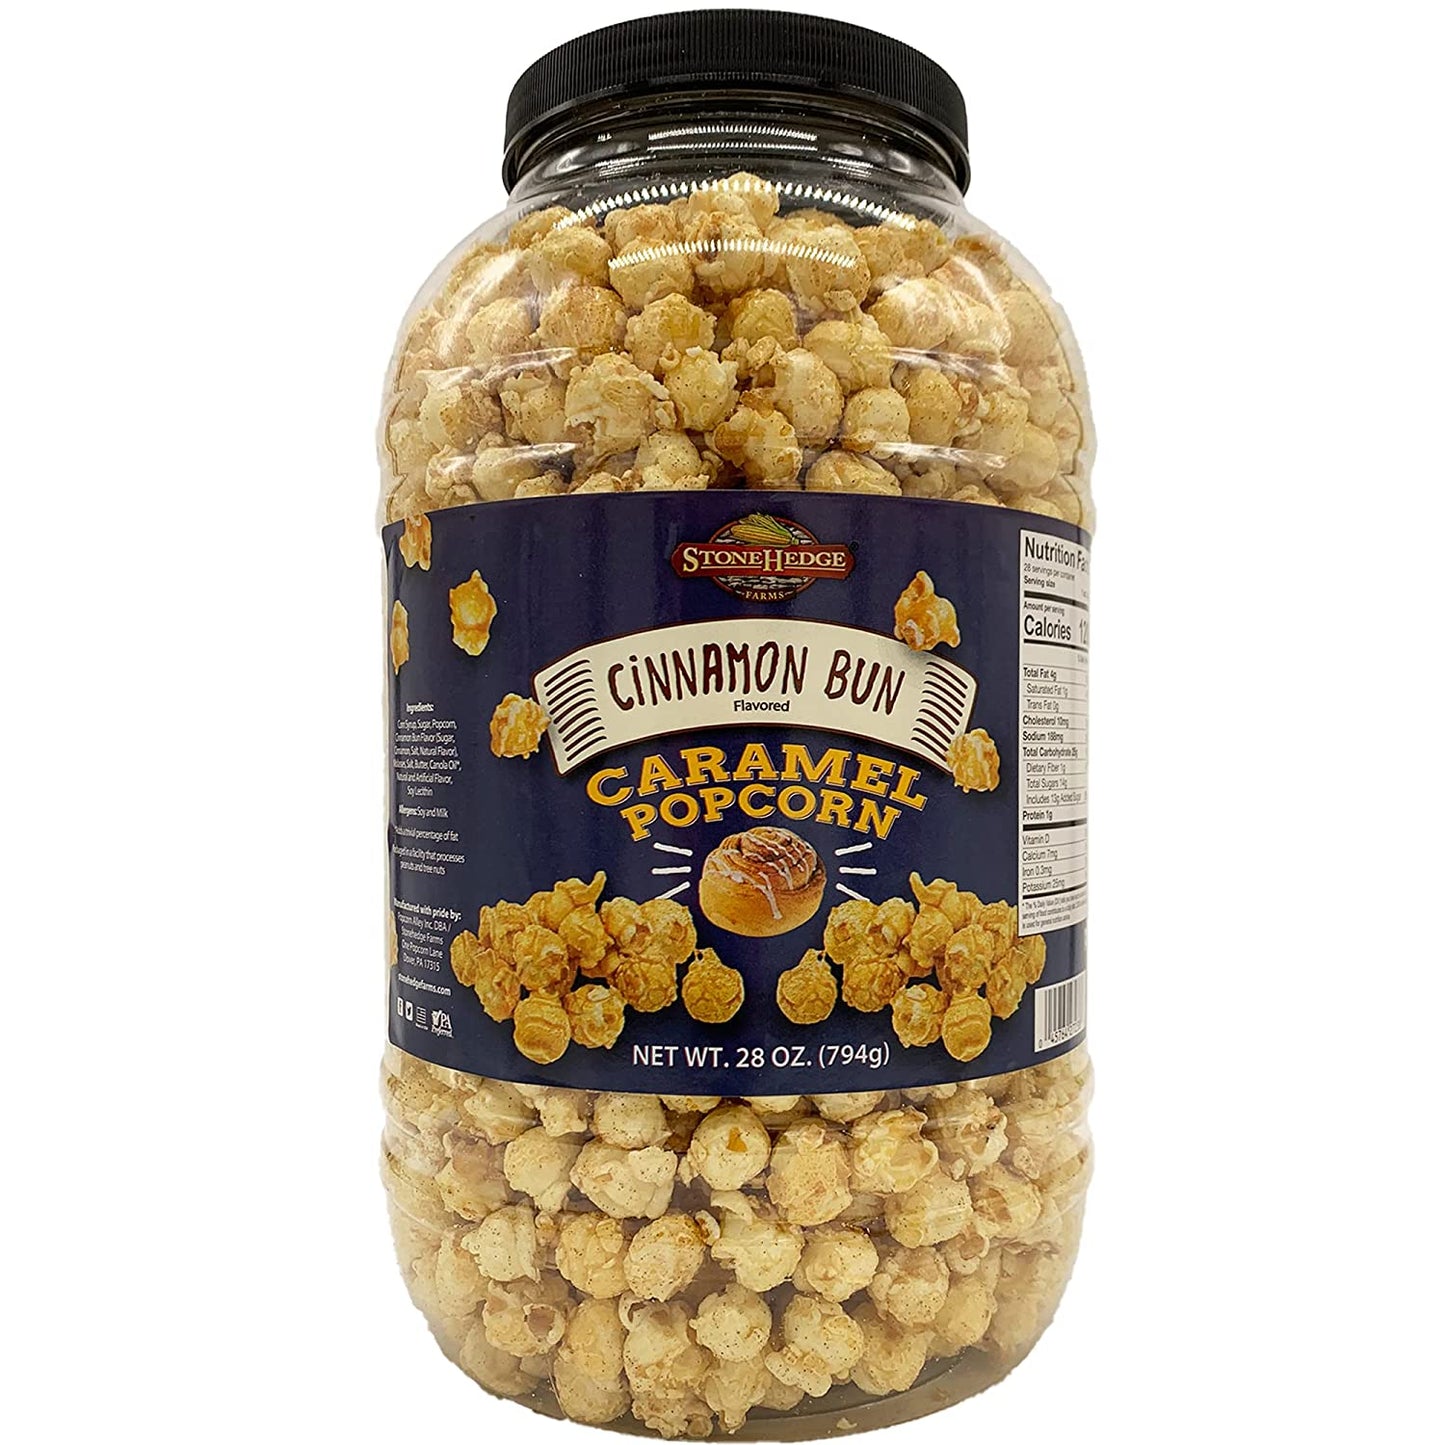 StoneHedge Farms Gourmet Cinnamon Bun Popcorn - Deliciously Old Fashioned 28 Oz. Tall Tub! - Made in the USA!